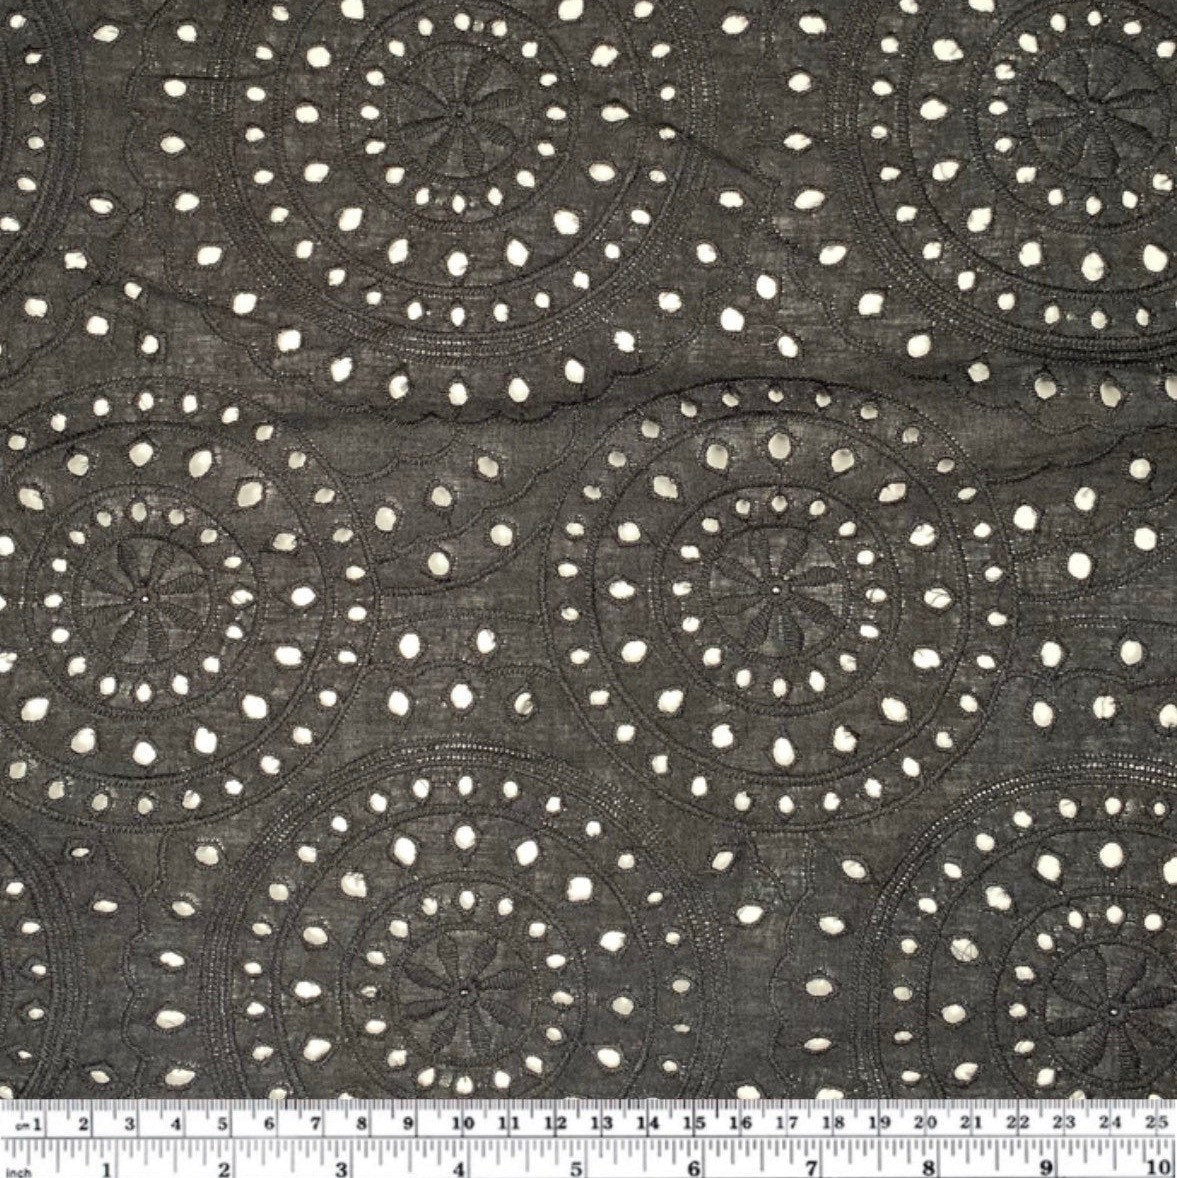 Embroidered Cotton Eyelet - Circles - Black